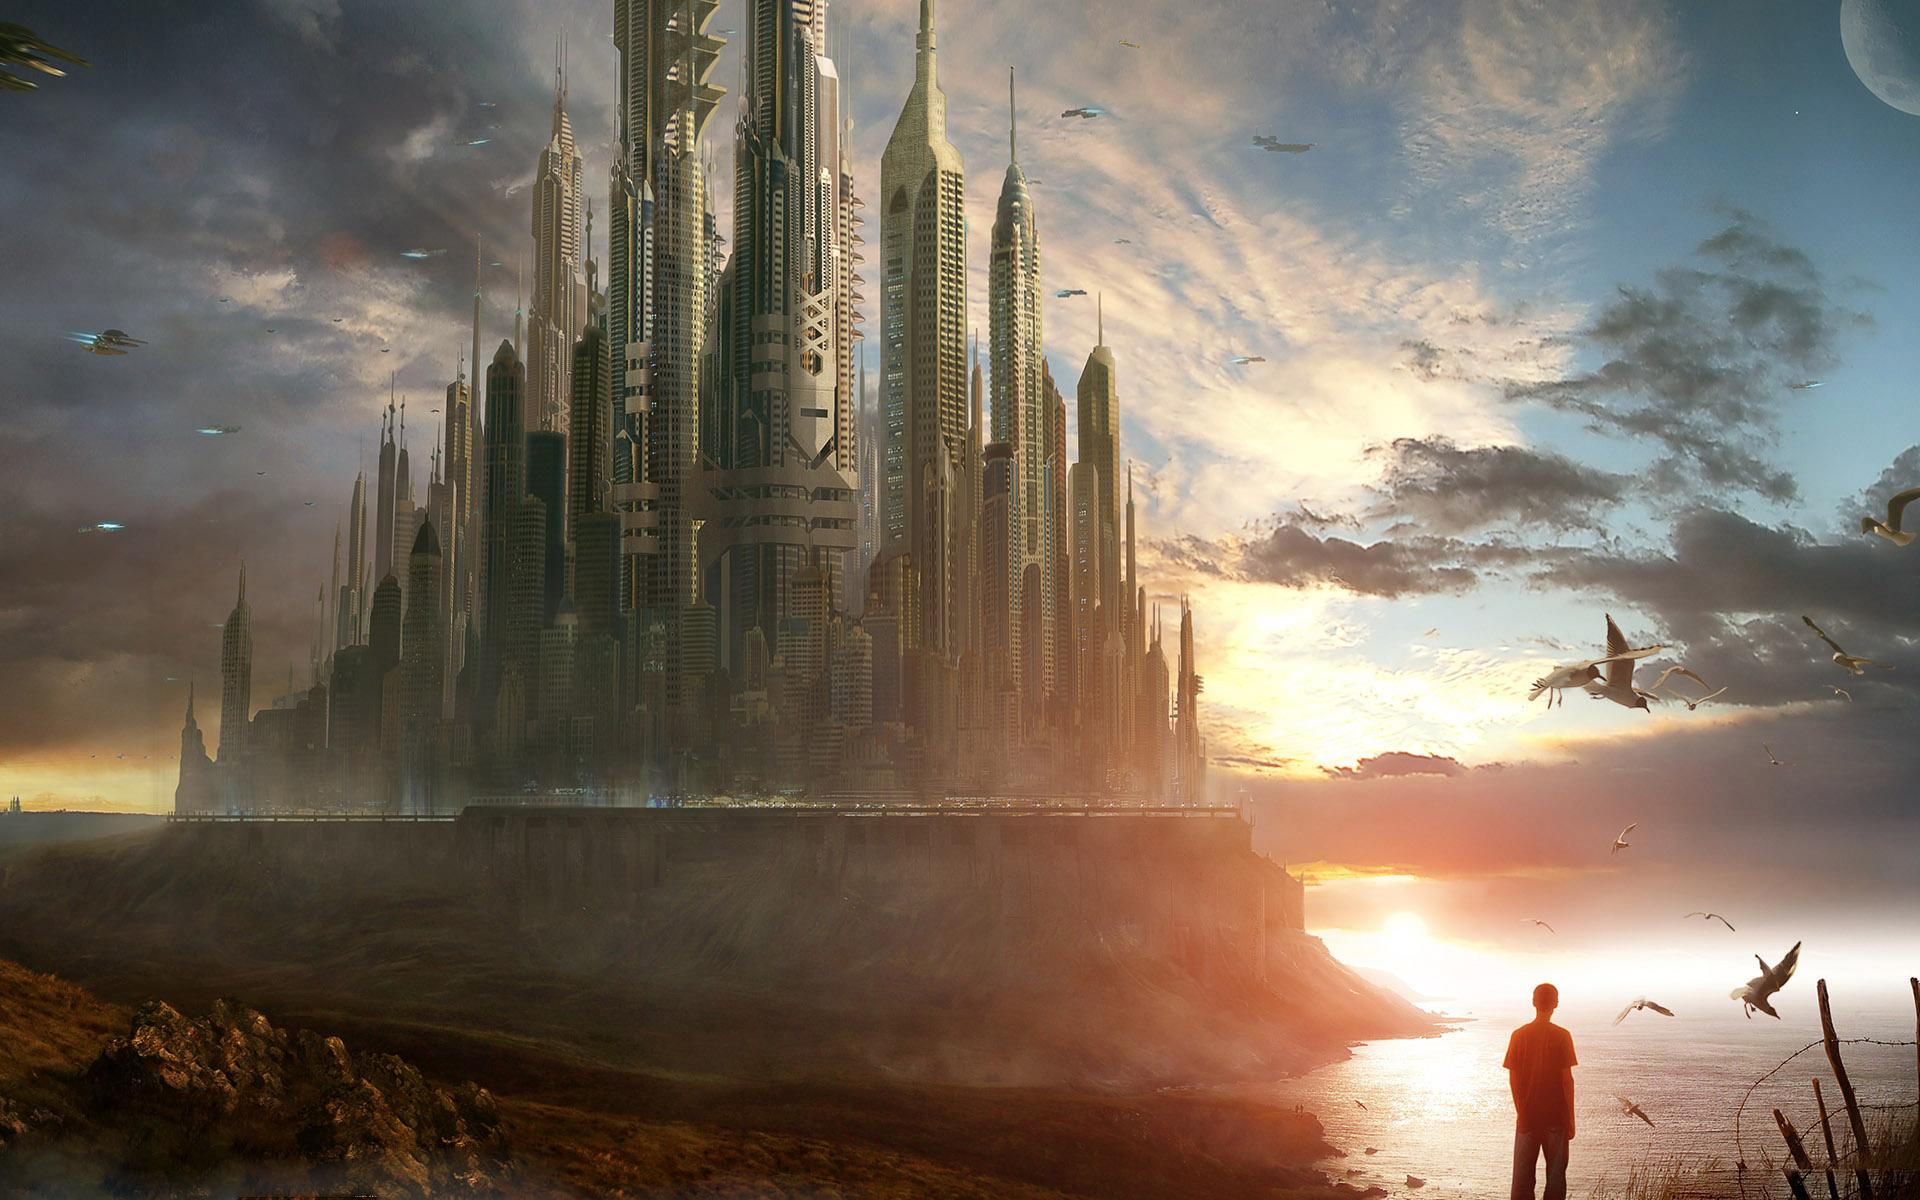 Free Fantasy Future City computer desktop wallpaper